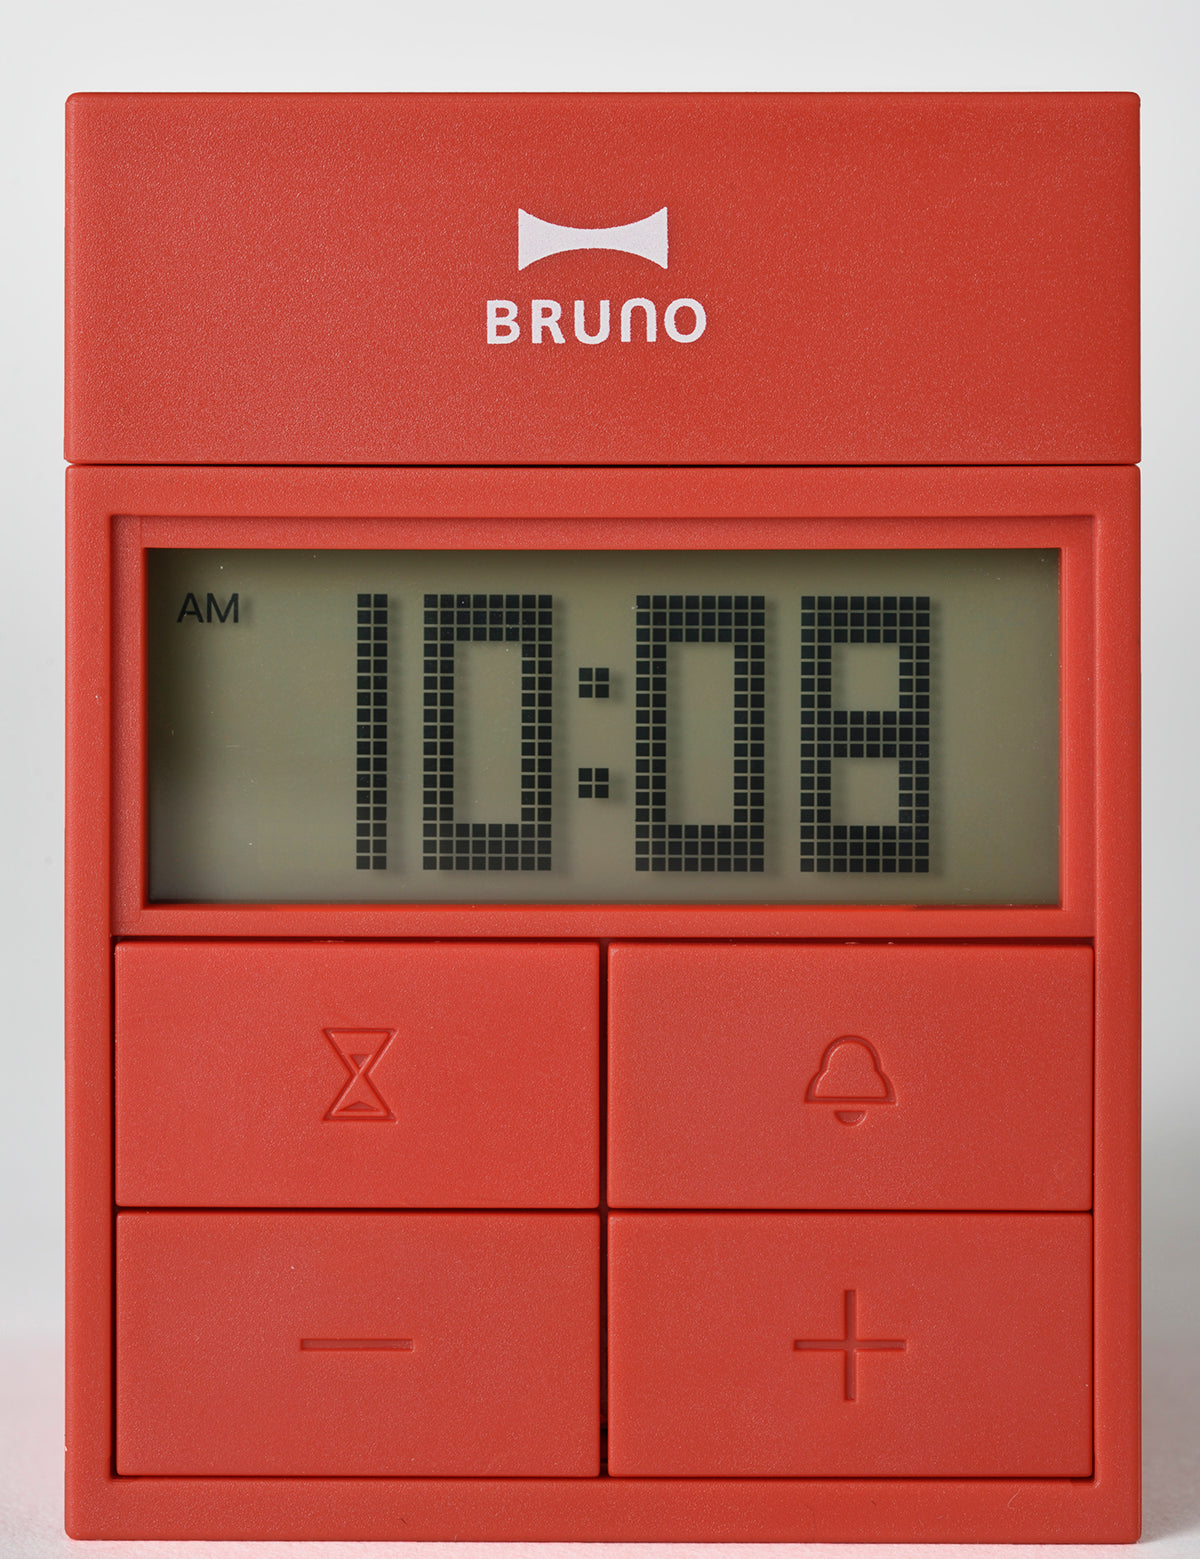 BRUNO Twist Table Clock - Green BCA026-GR